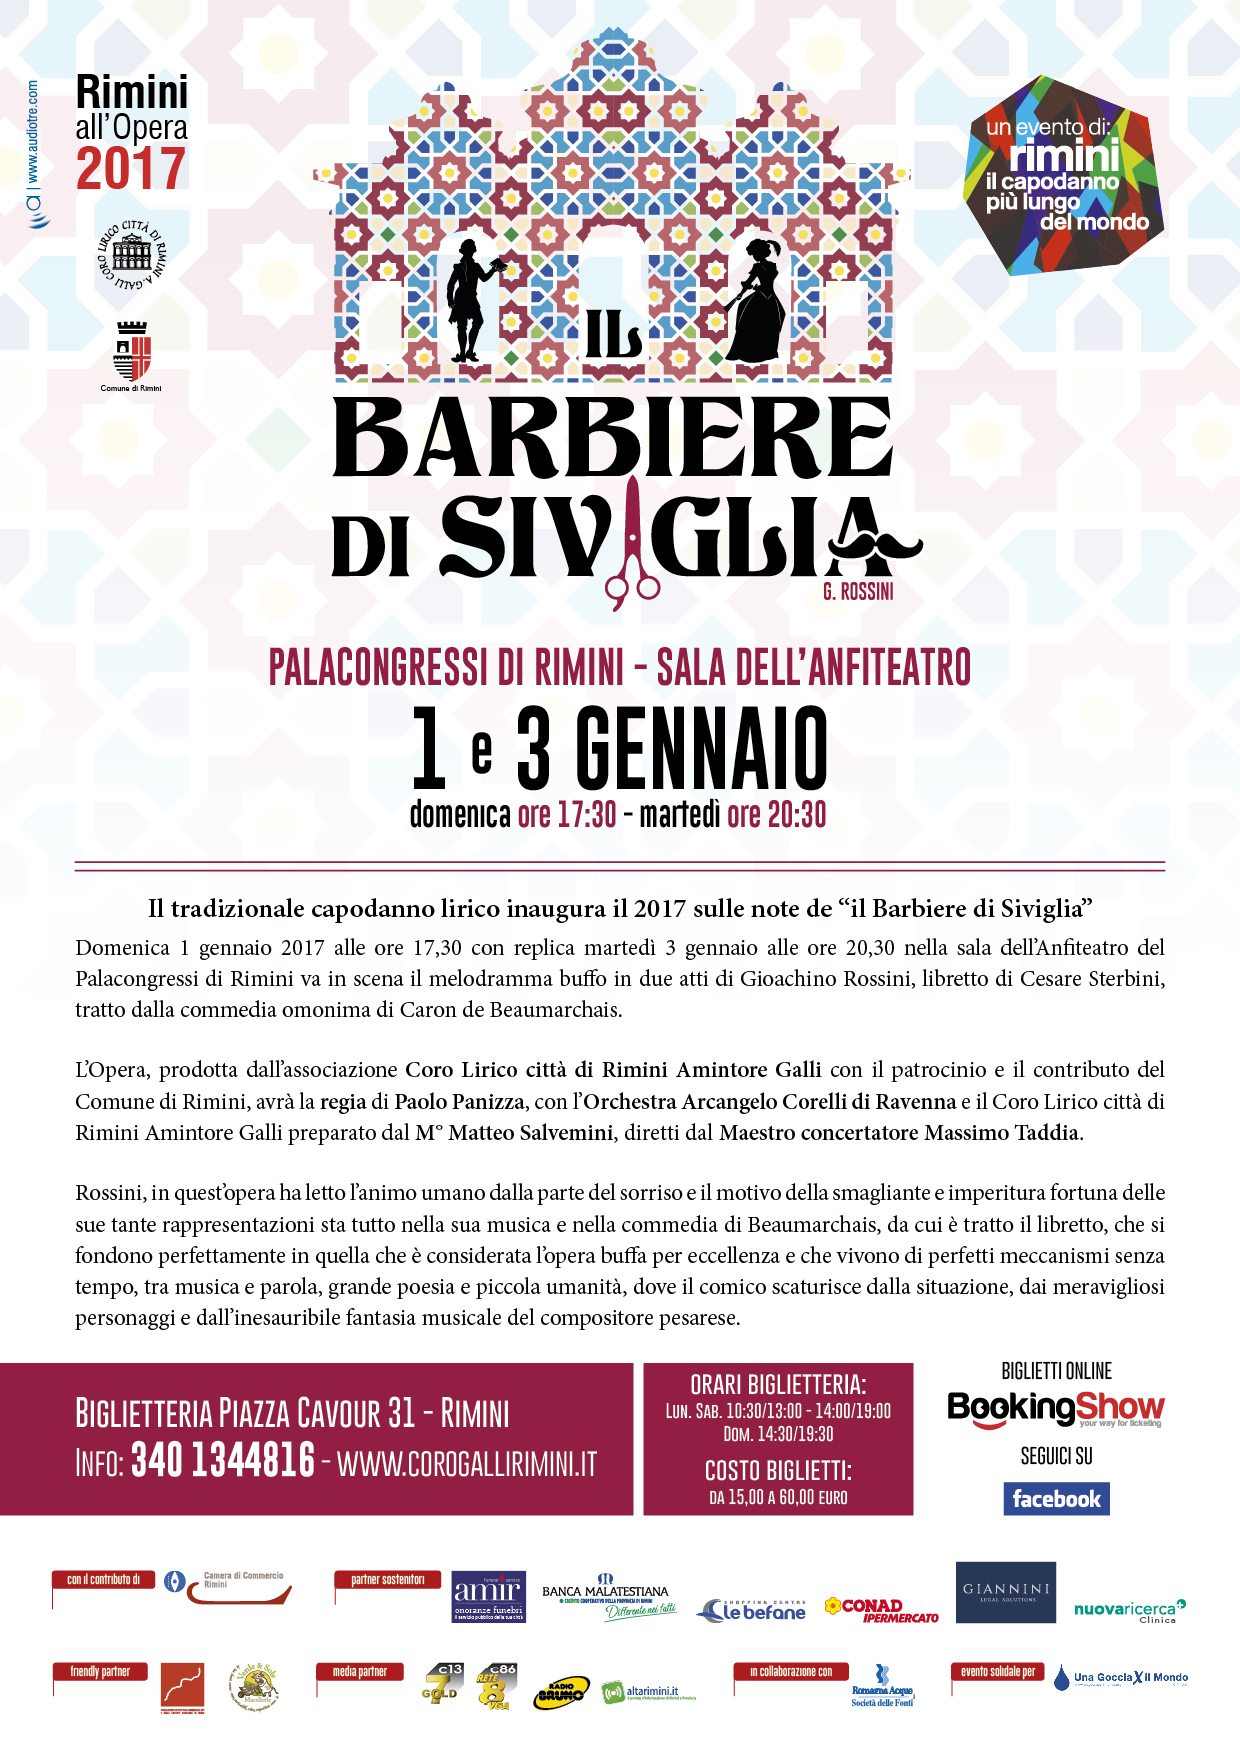 Rimini Opera 2017